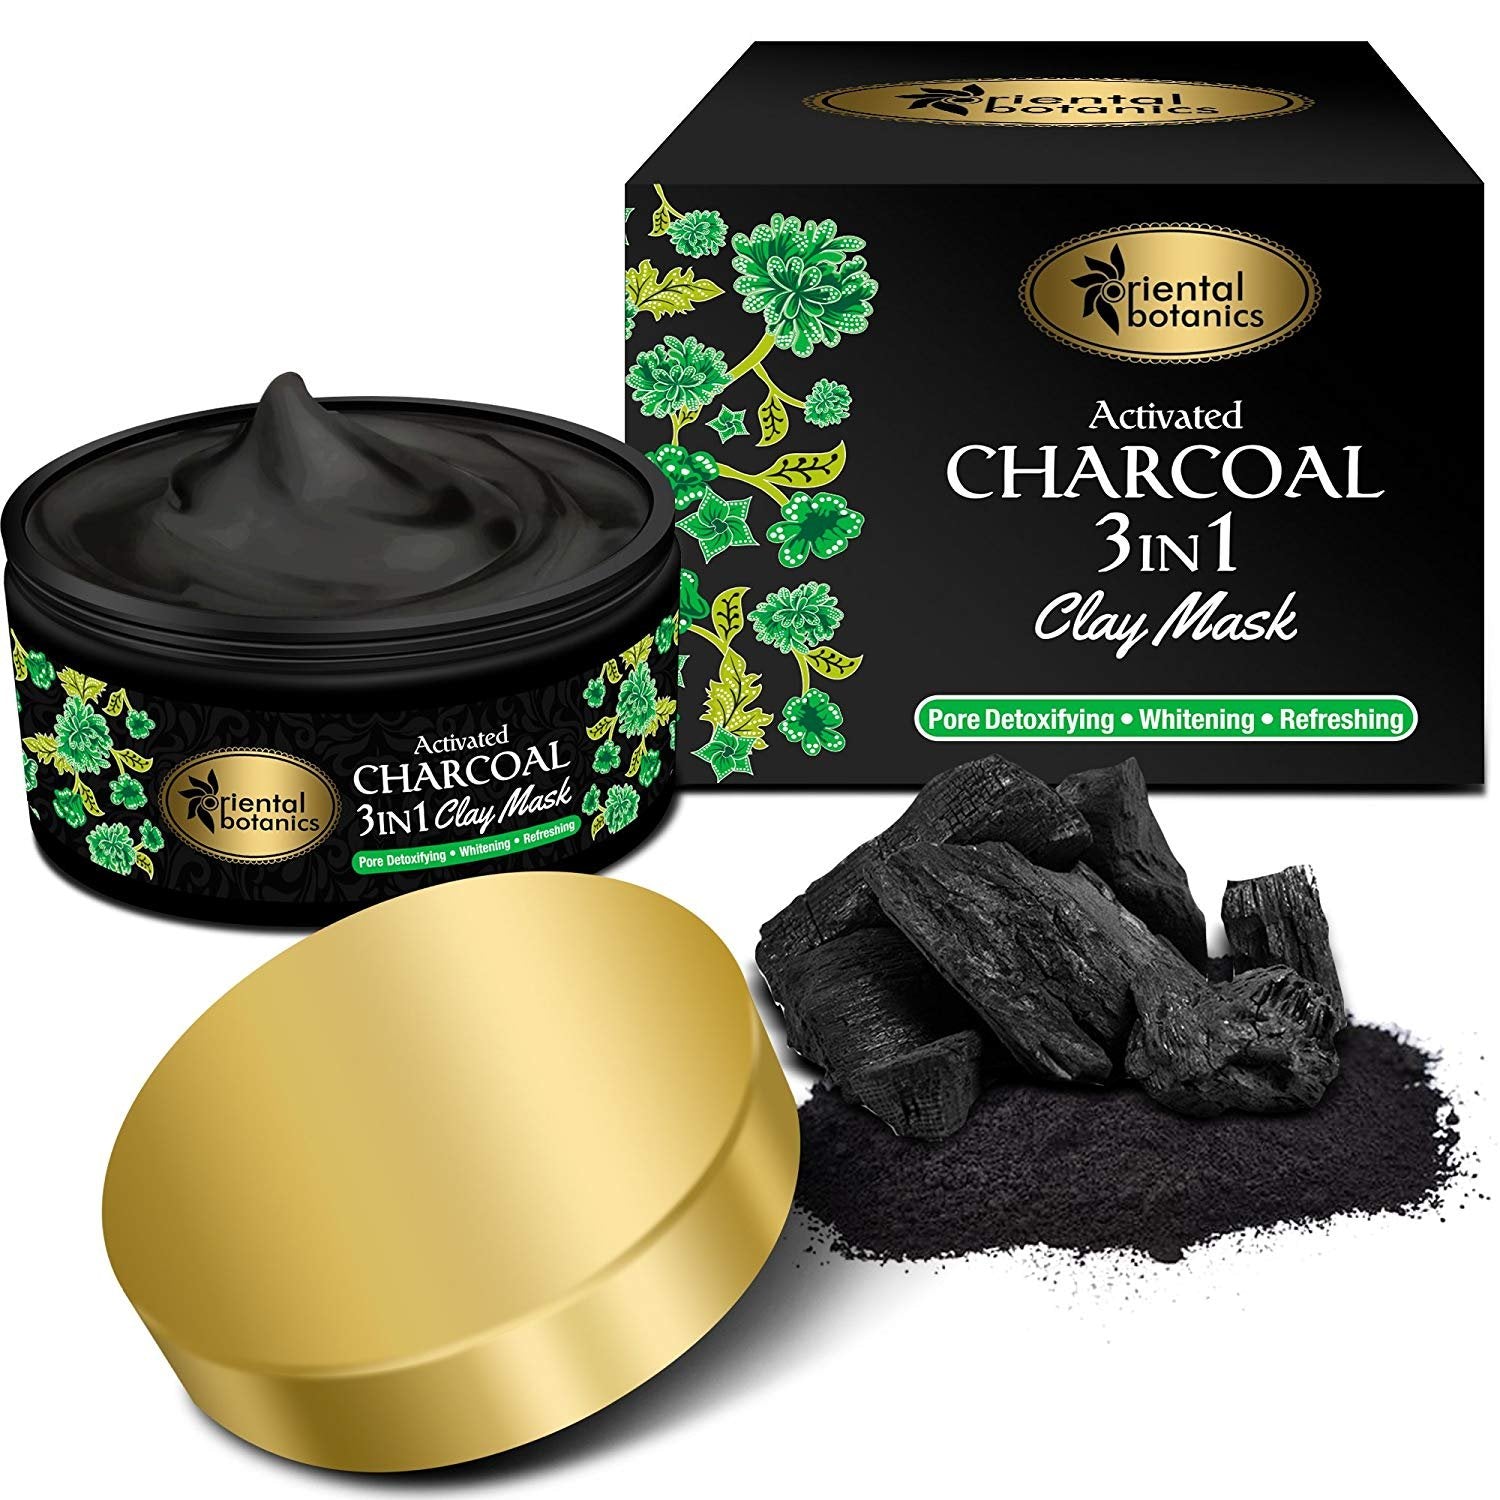 Oriental Botanics Activated Charcoal 3 In 1 Clay Mask, 100 g | Detoxifying, Whitening, Refreshing